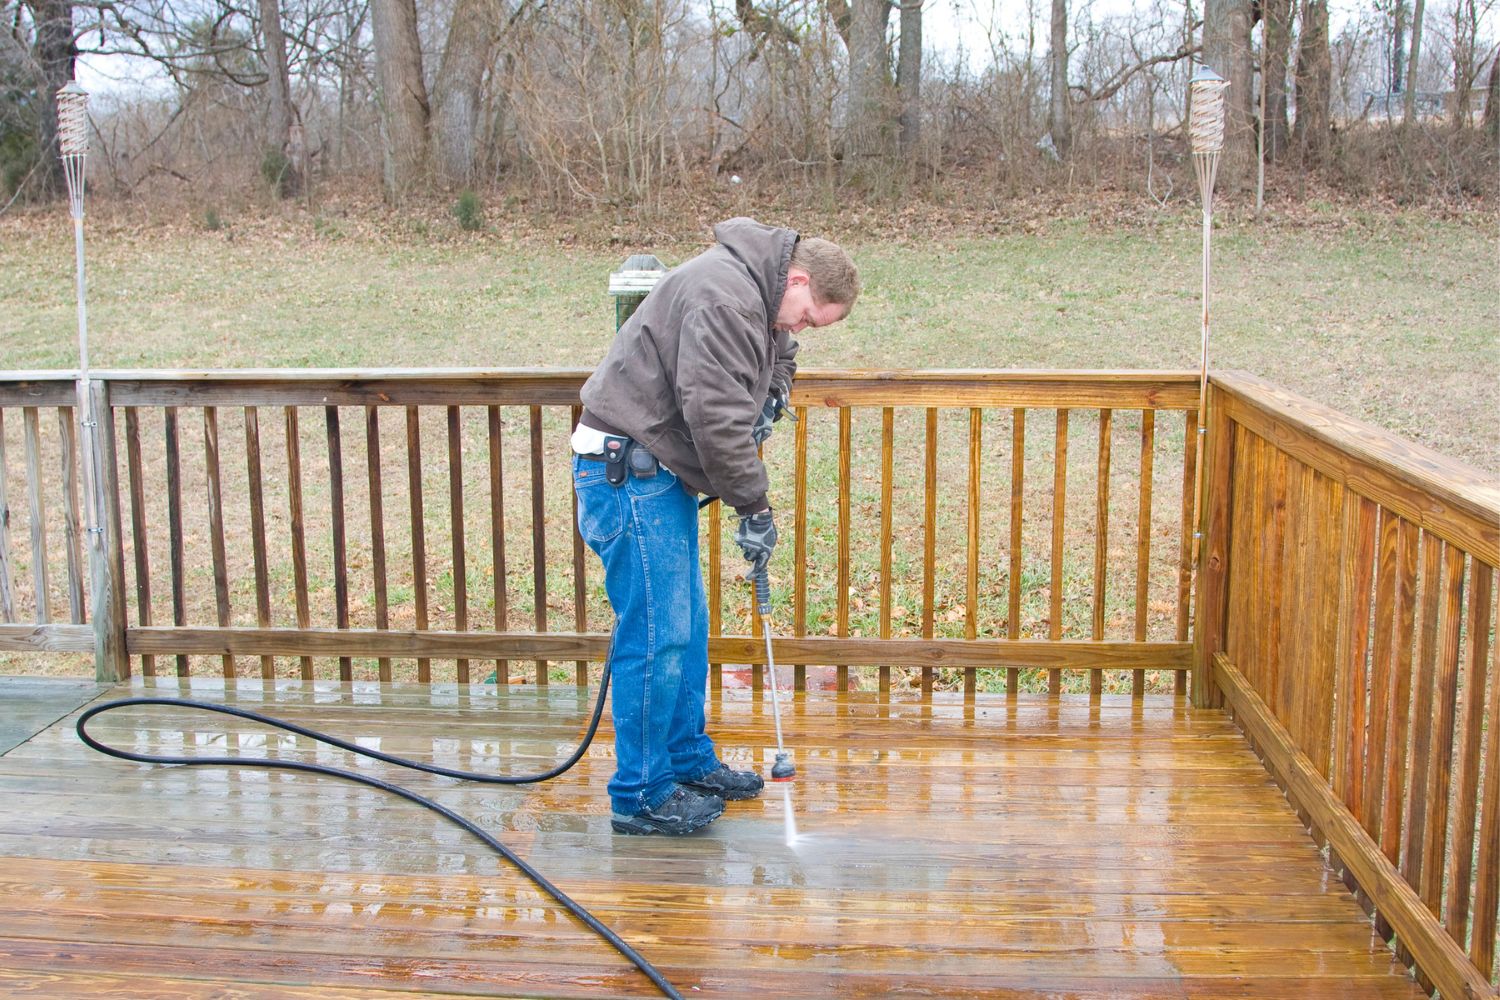 A person pressure washes a deck.